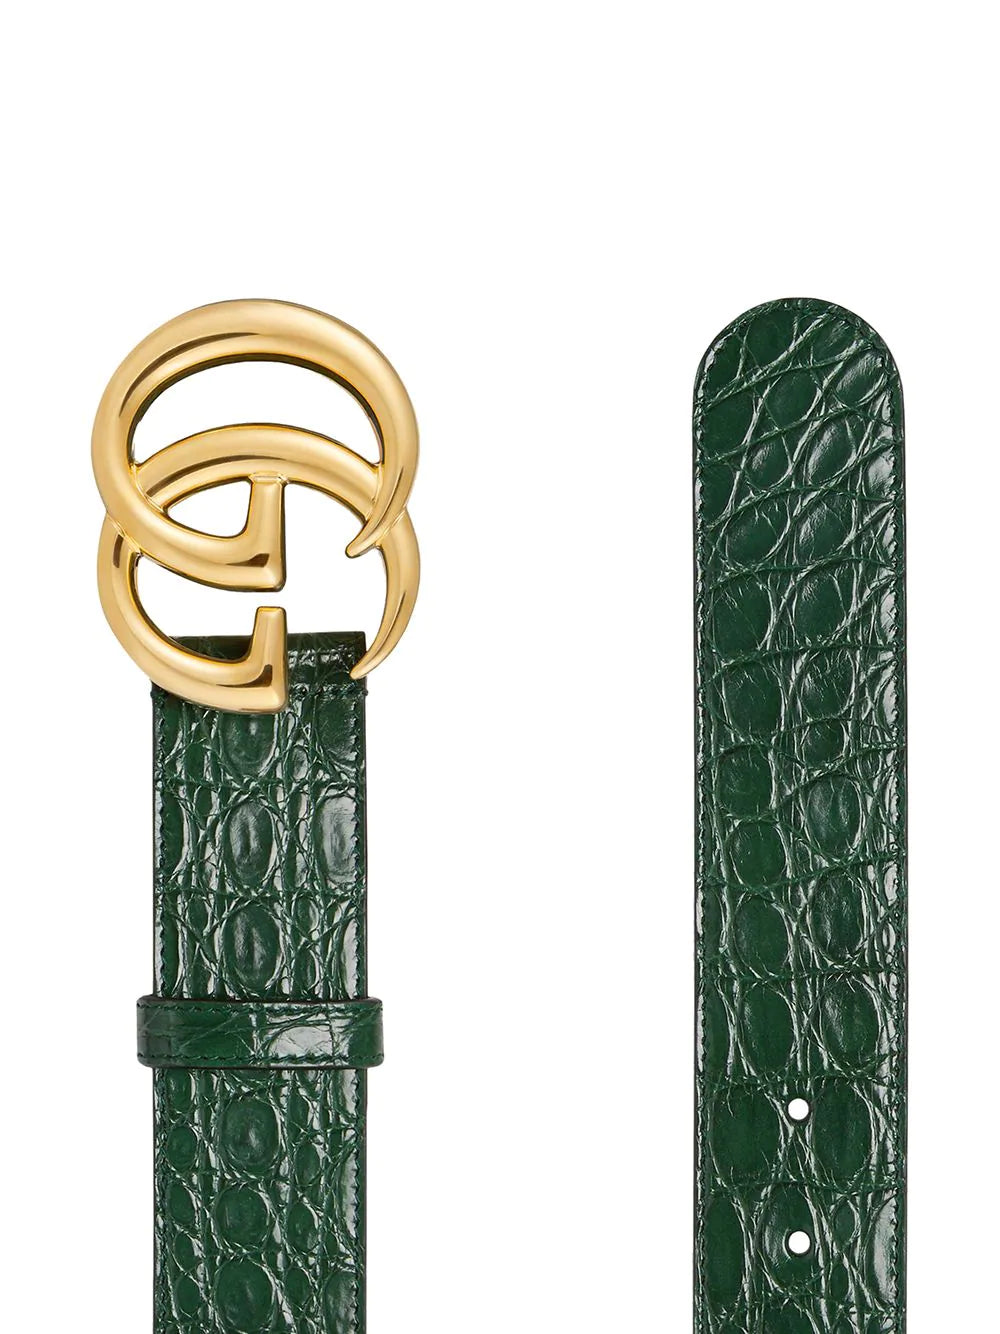 Gucci Double G Crocodile-Effect Belt